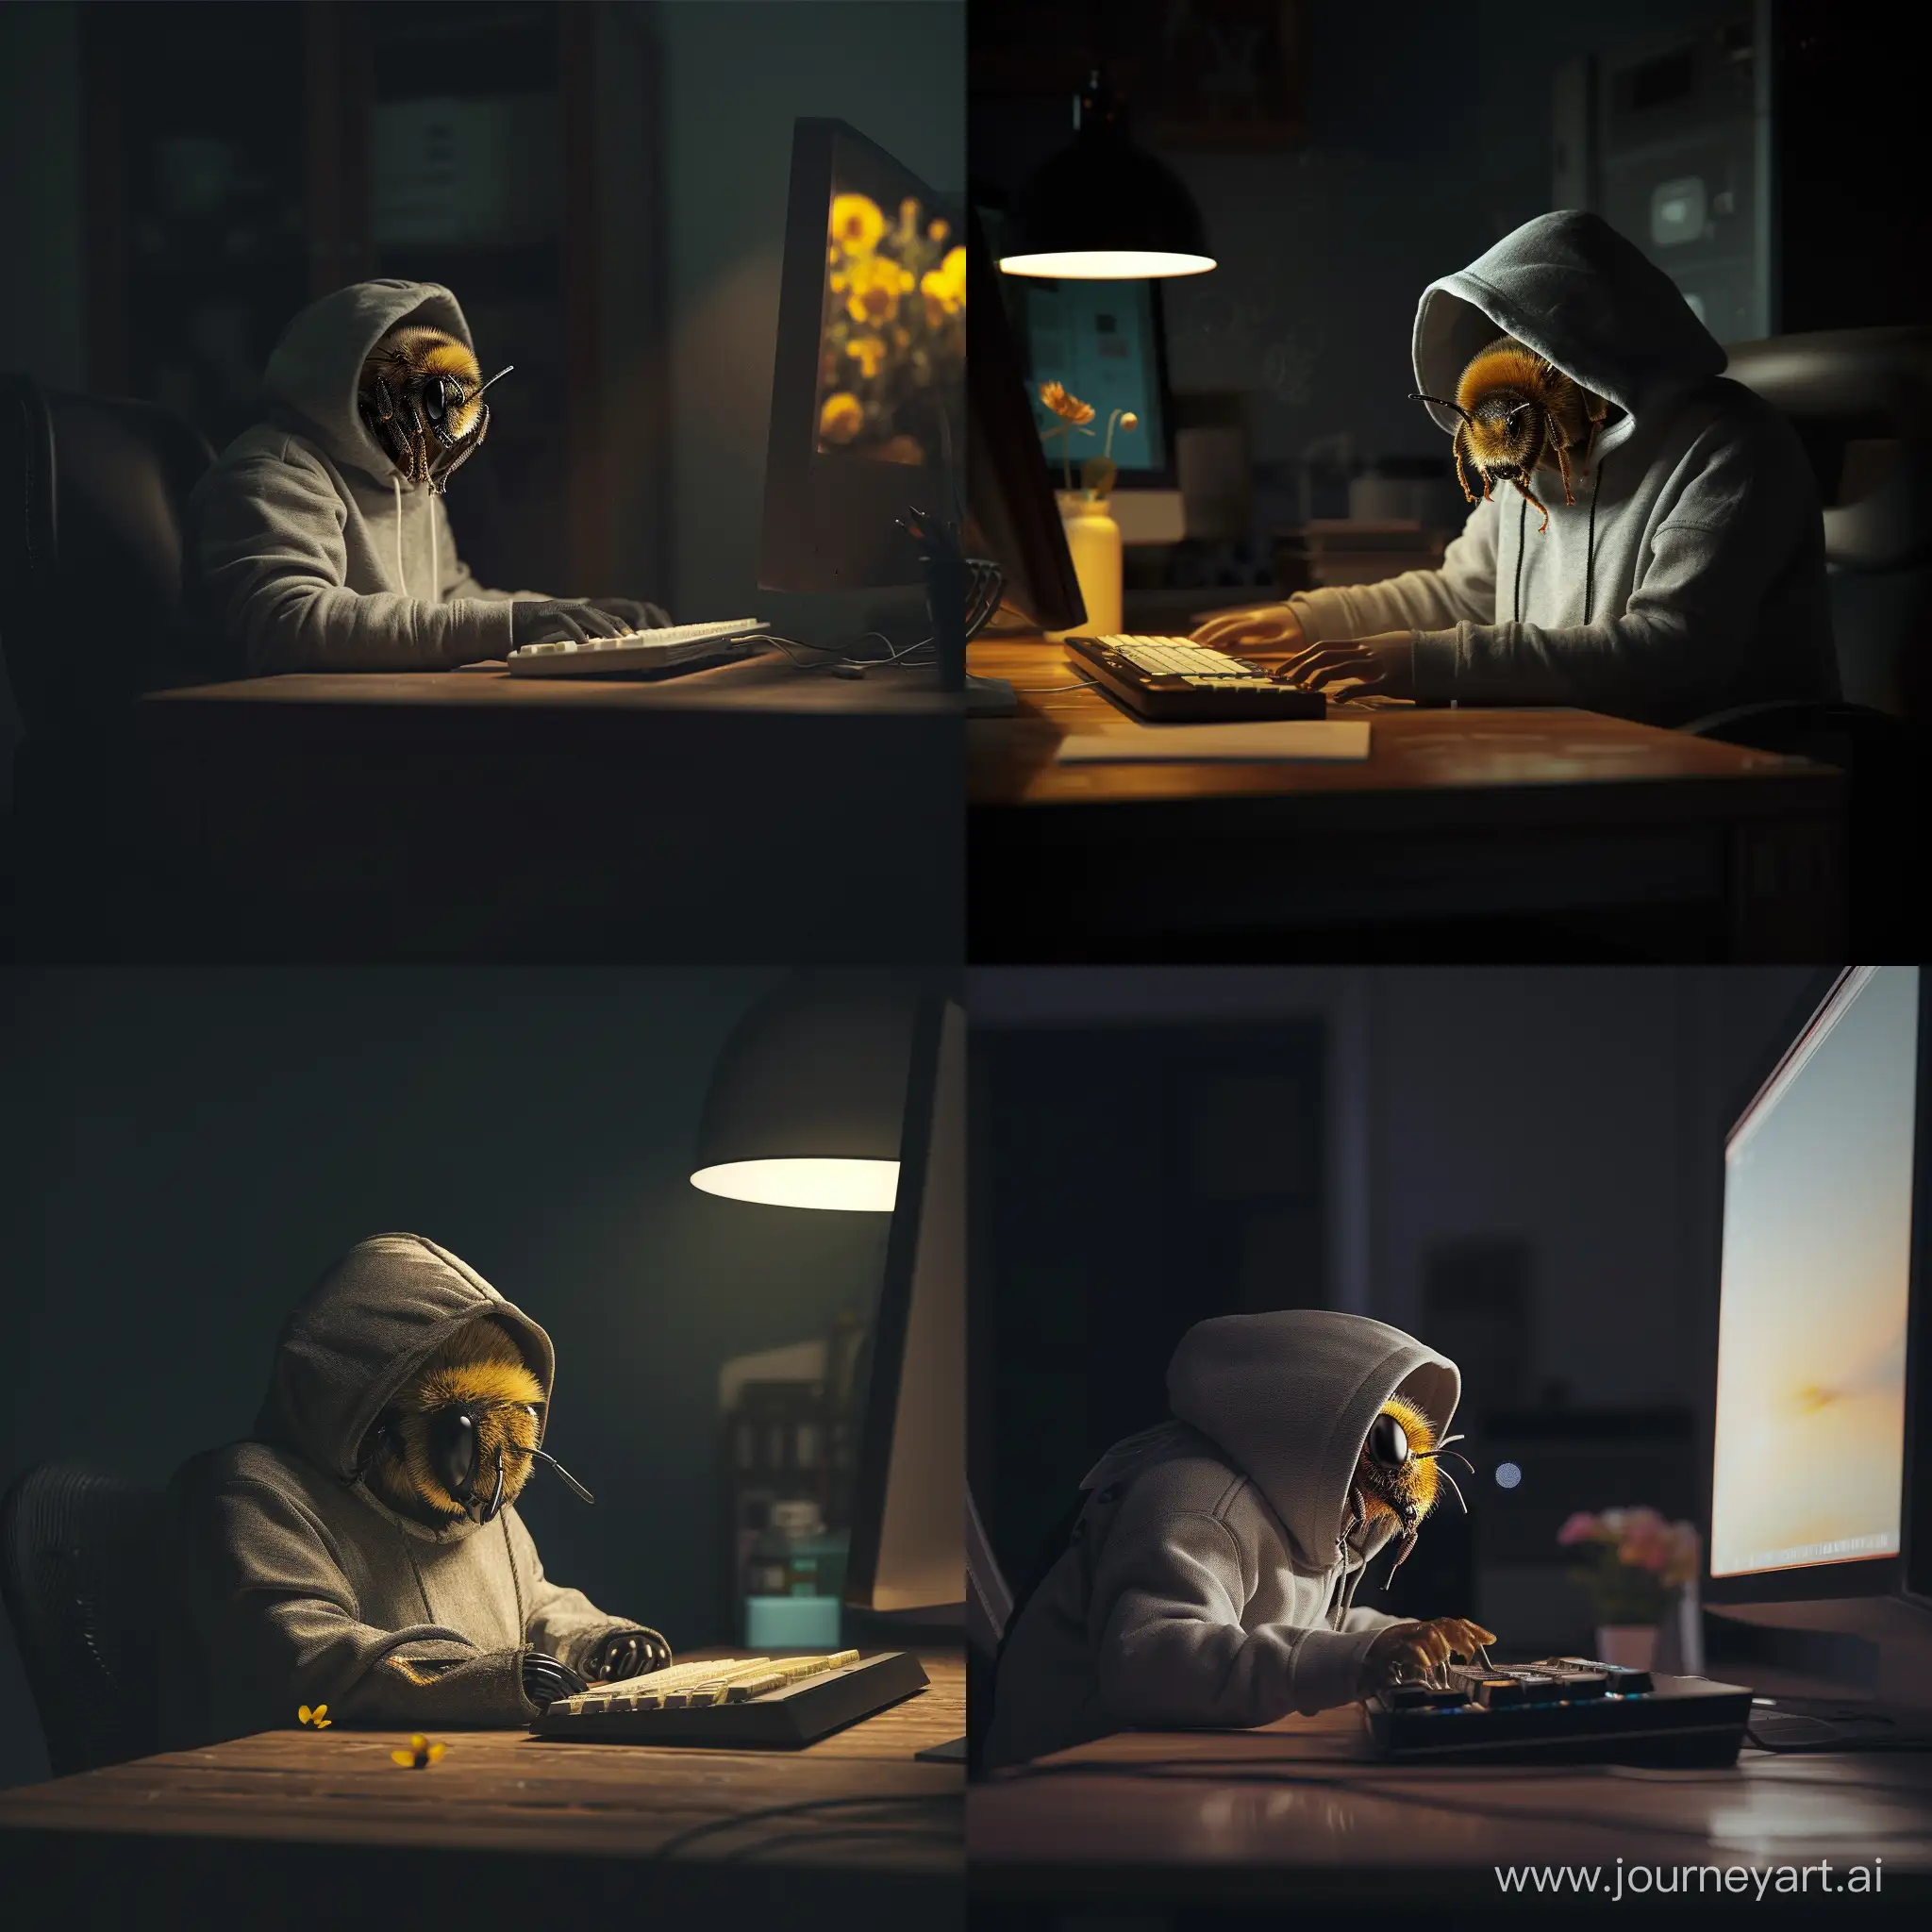 Intelligent-Bee-Wearing-Grey-Hoodie-Working-at-Computer-in-Dimly-Lit-Room